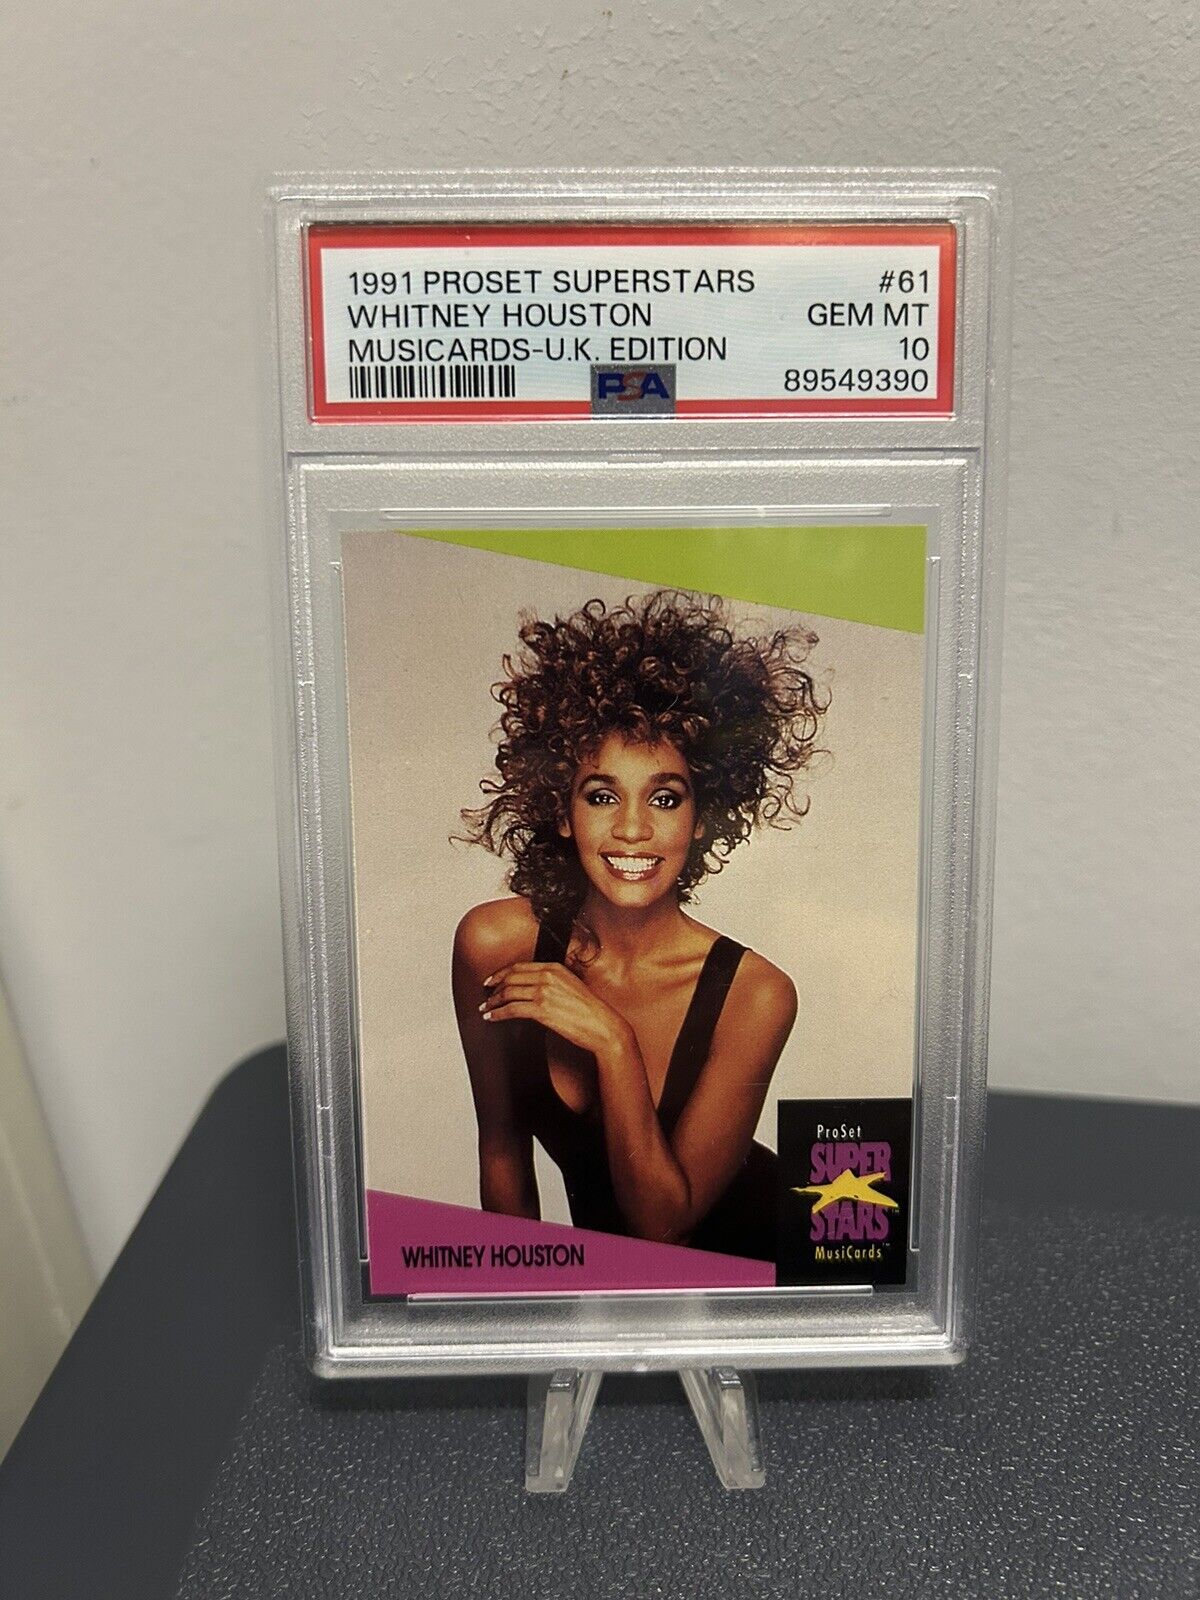 1991 Pro Set Superstars #61 Whitney Houston Musicards UK Edition PSA 10 Pop 7